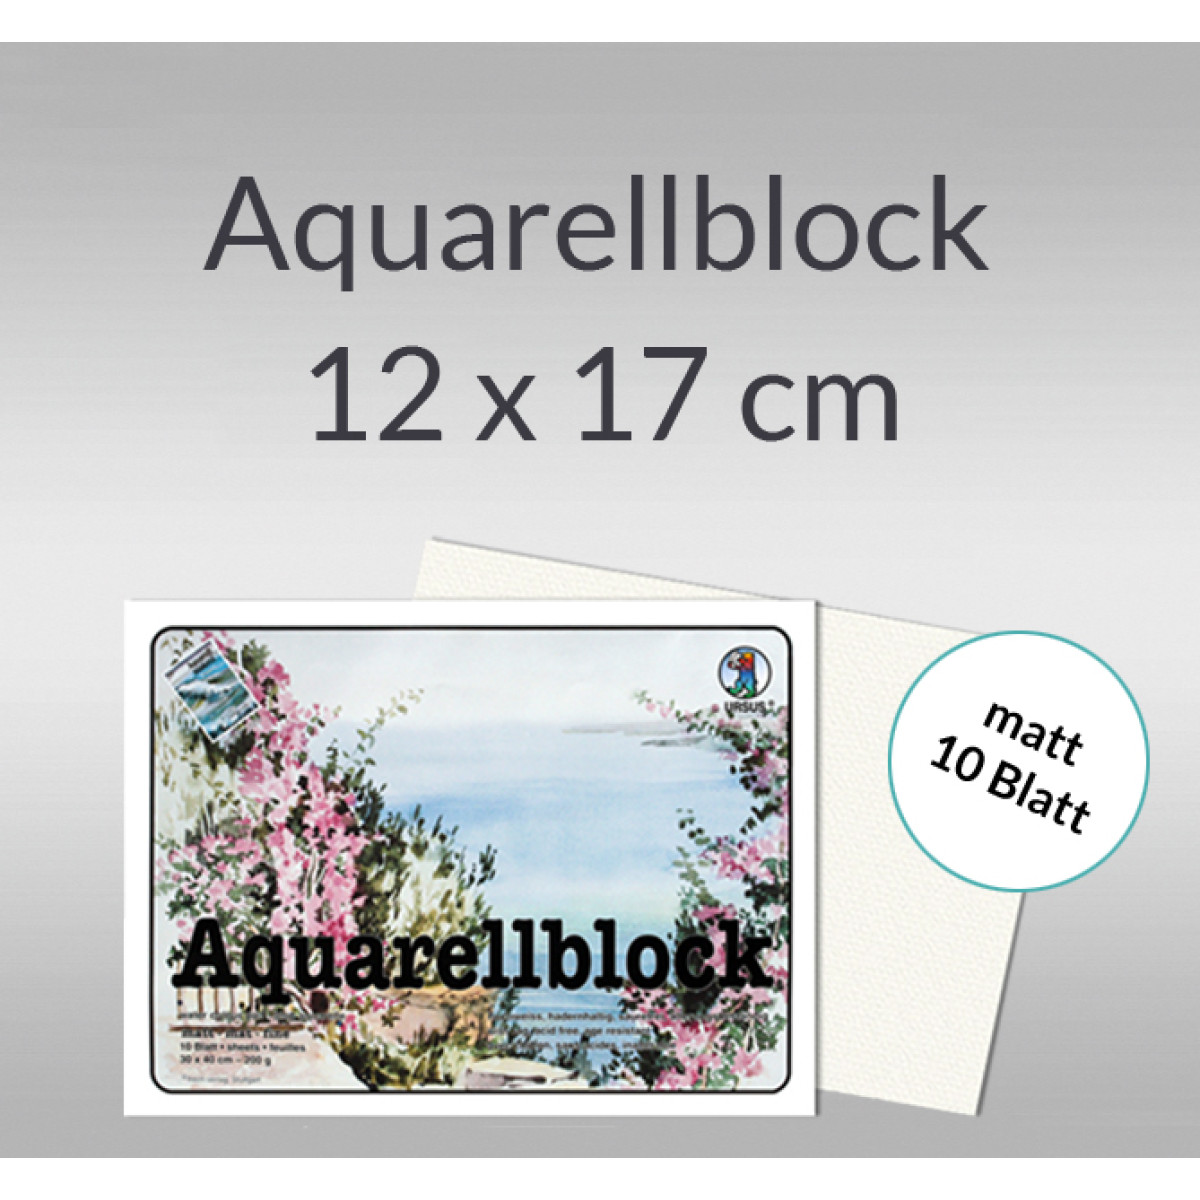 Aquarellblock matt 200 g/qm 12 x 17 cm